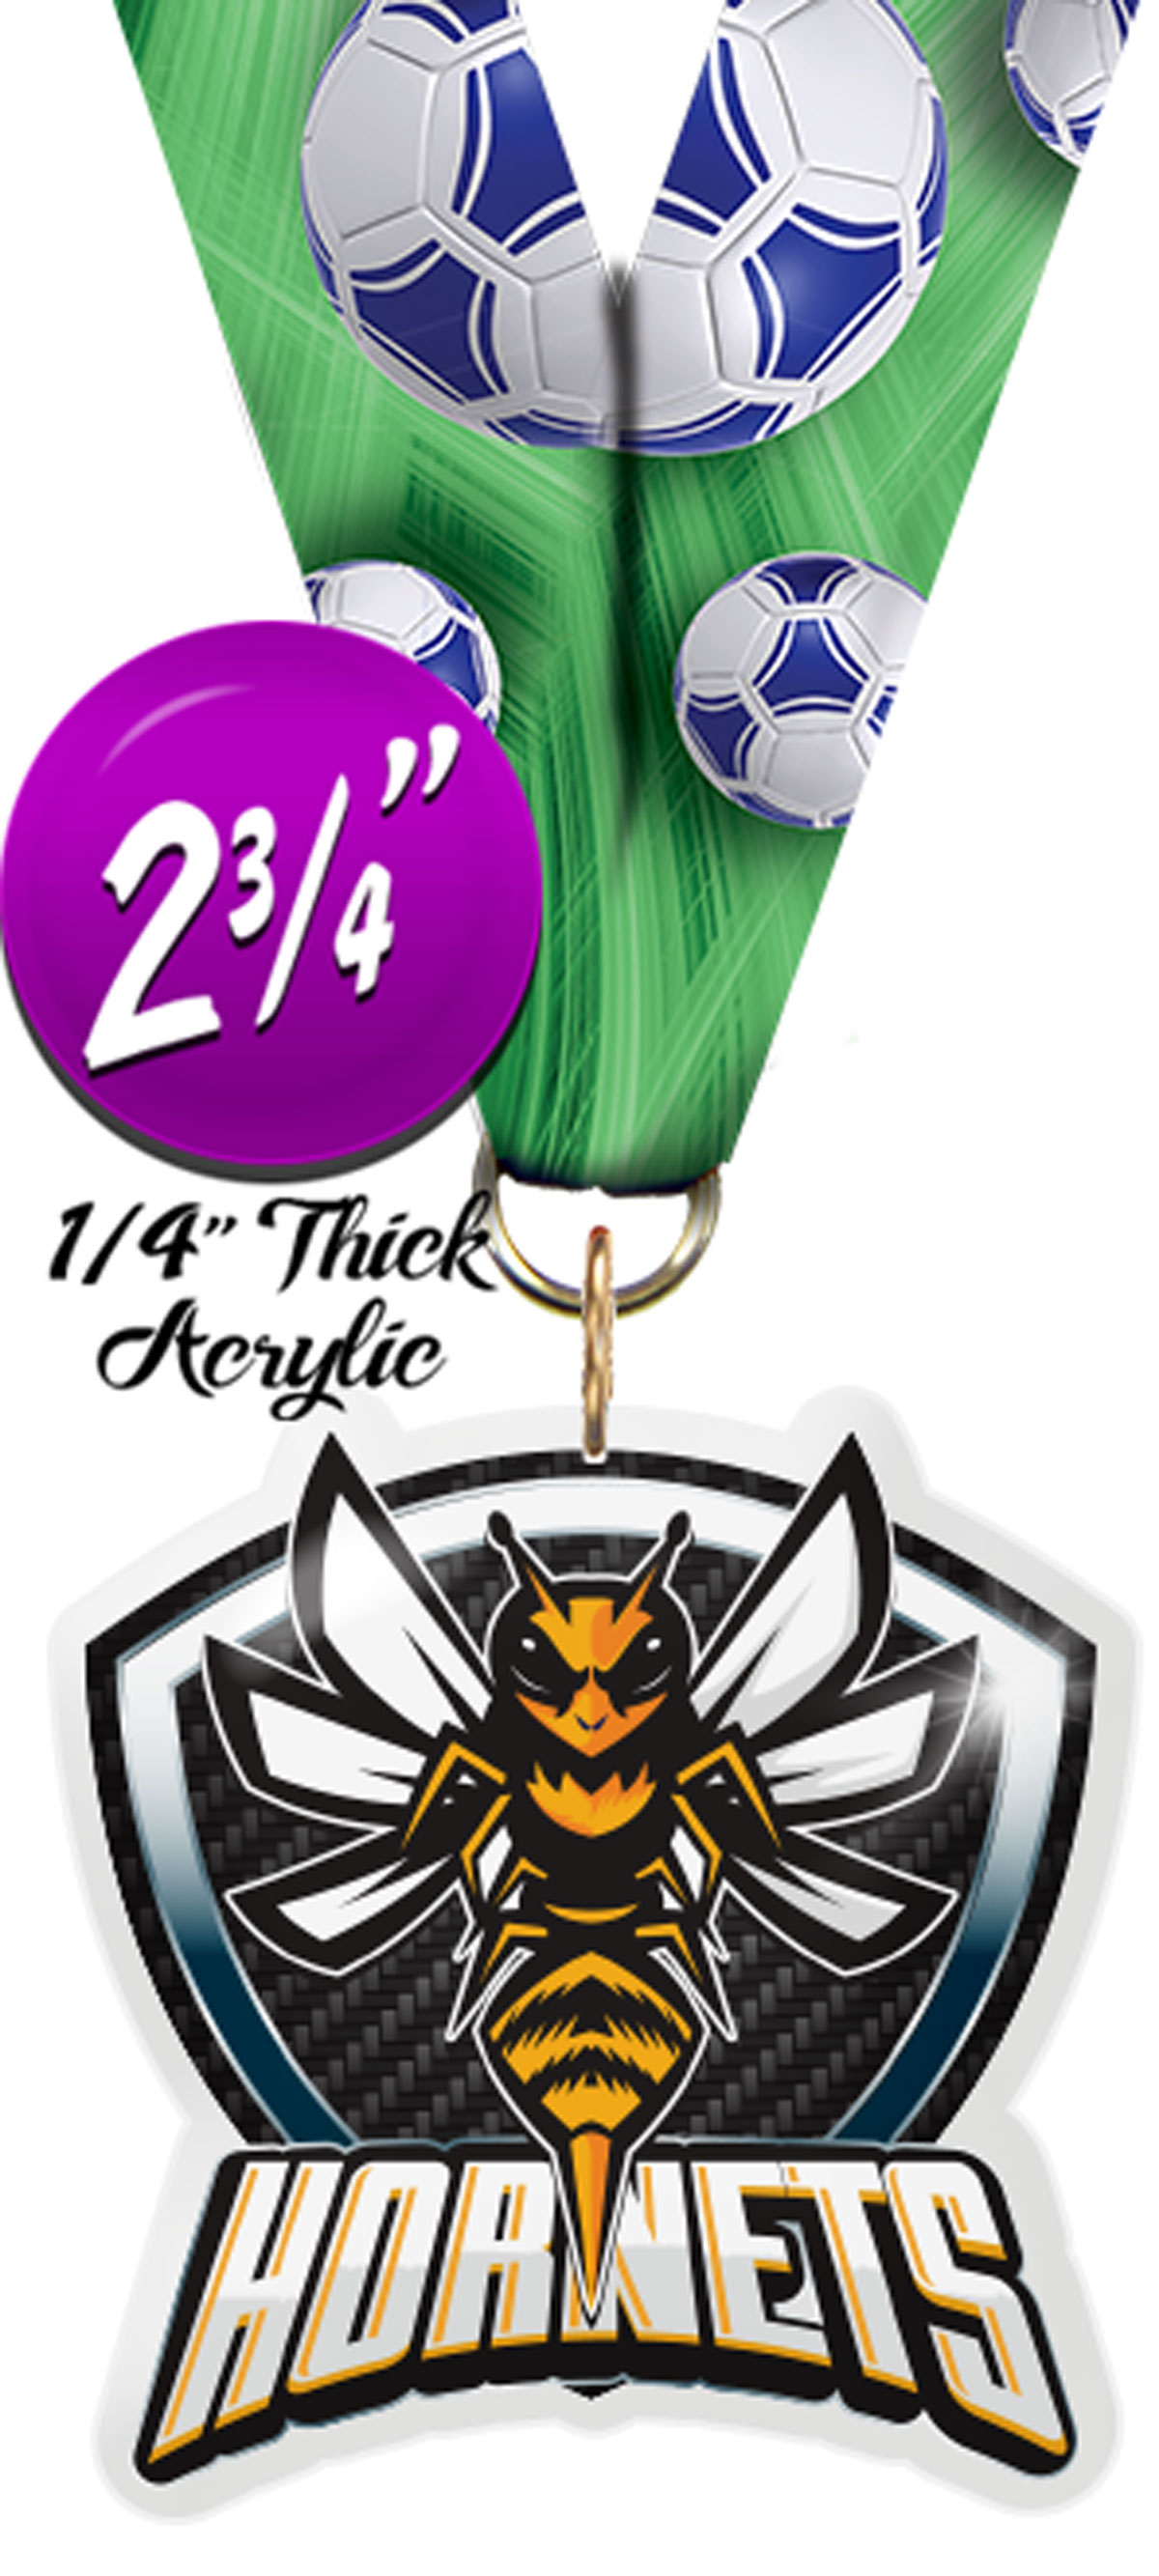 Hornet Mascot Shield Colorix Acrylic Medal